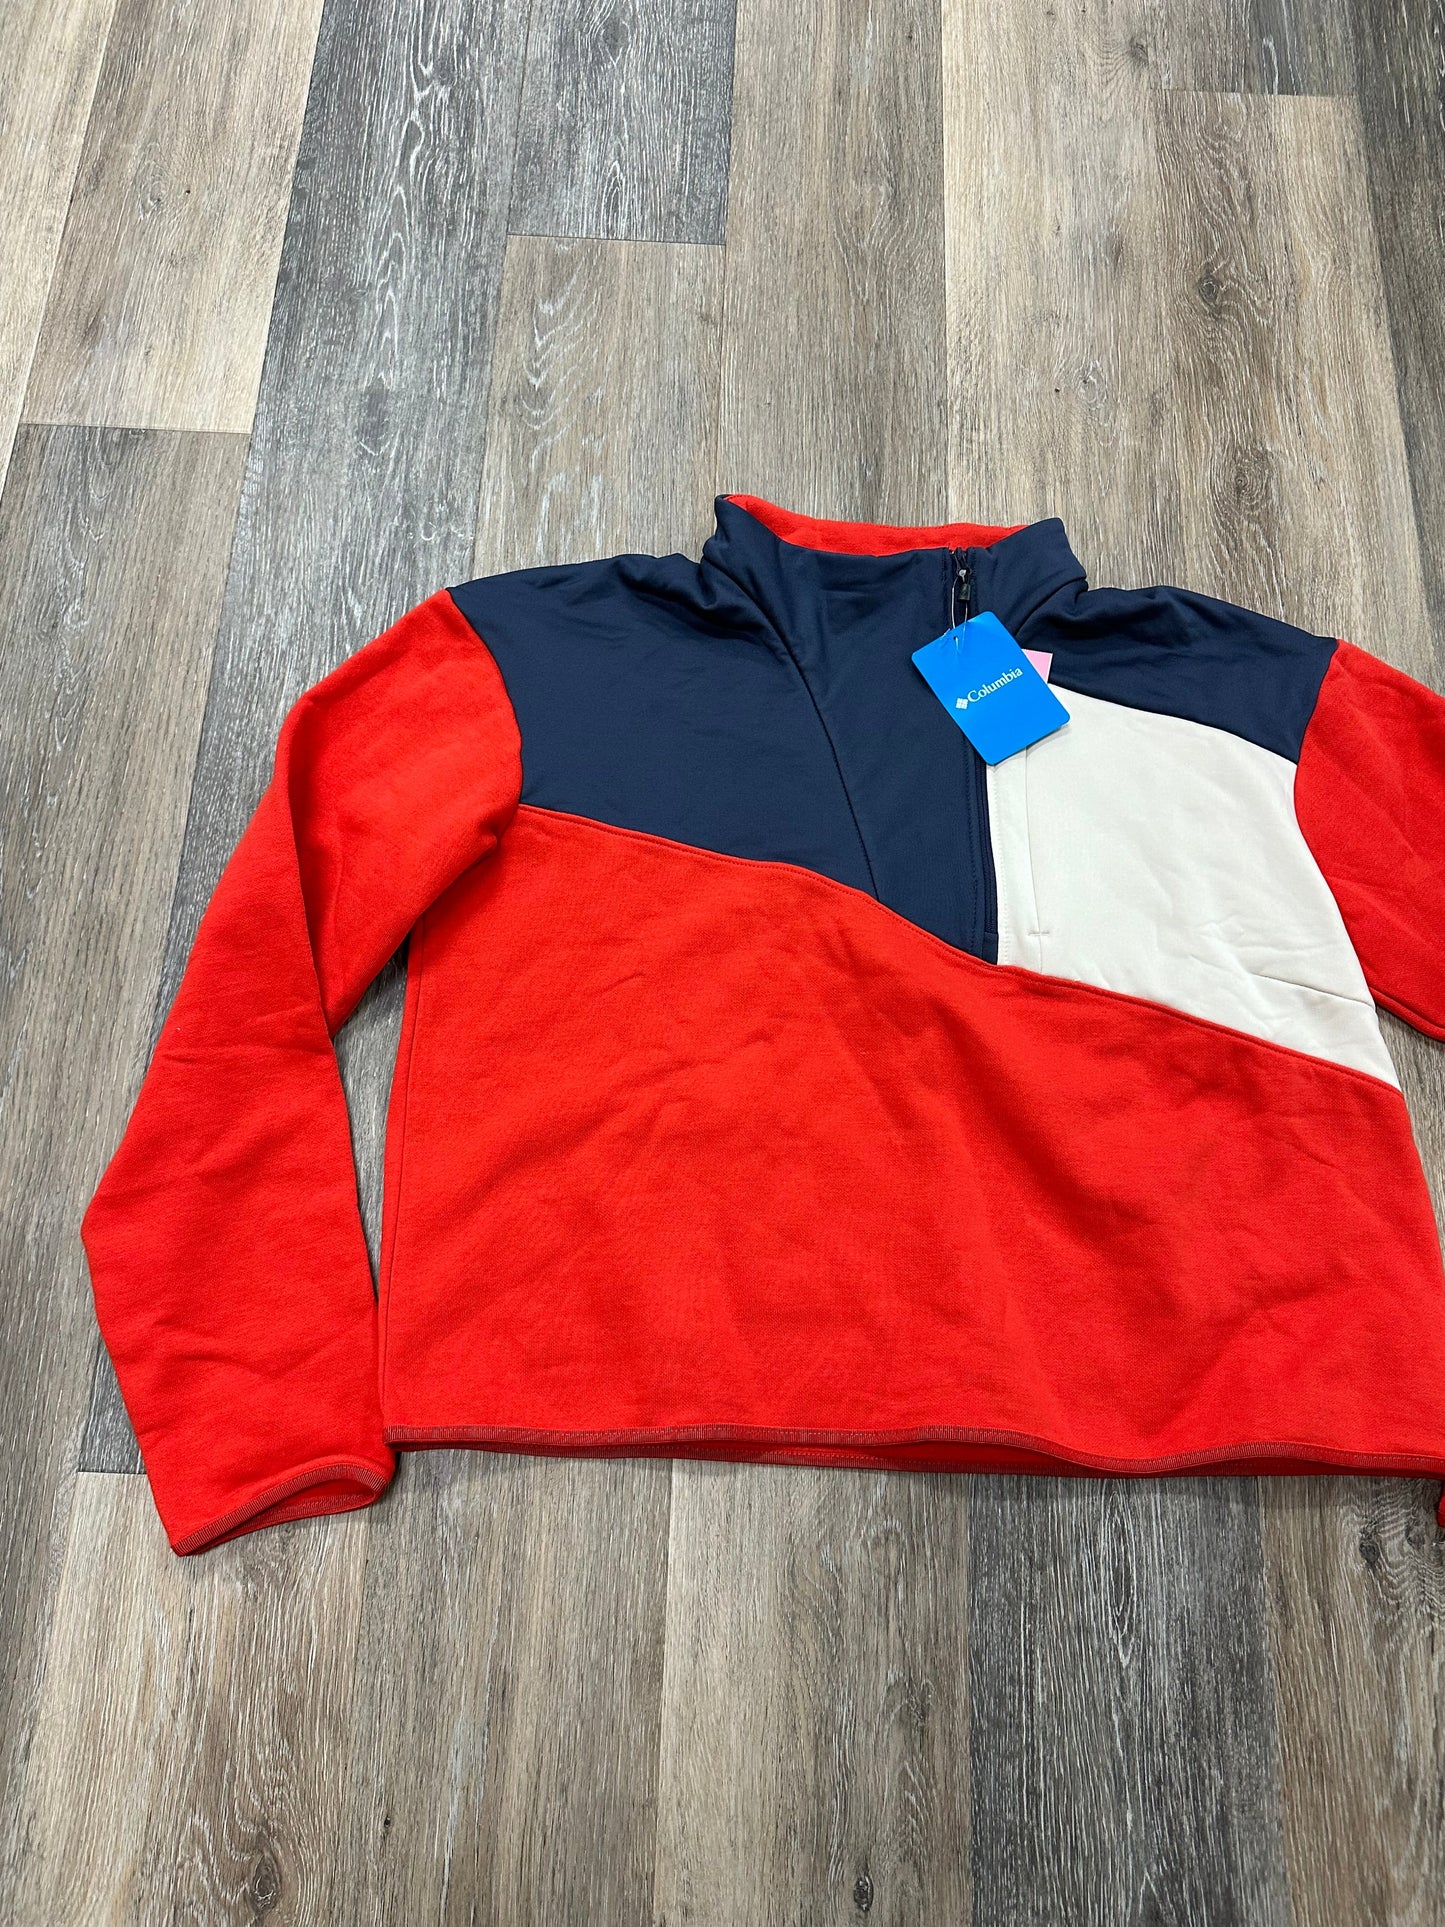 Sweatshirt Crewneck By Columbia  Size: Xl